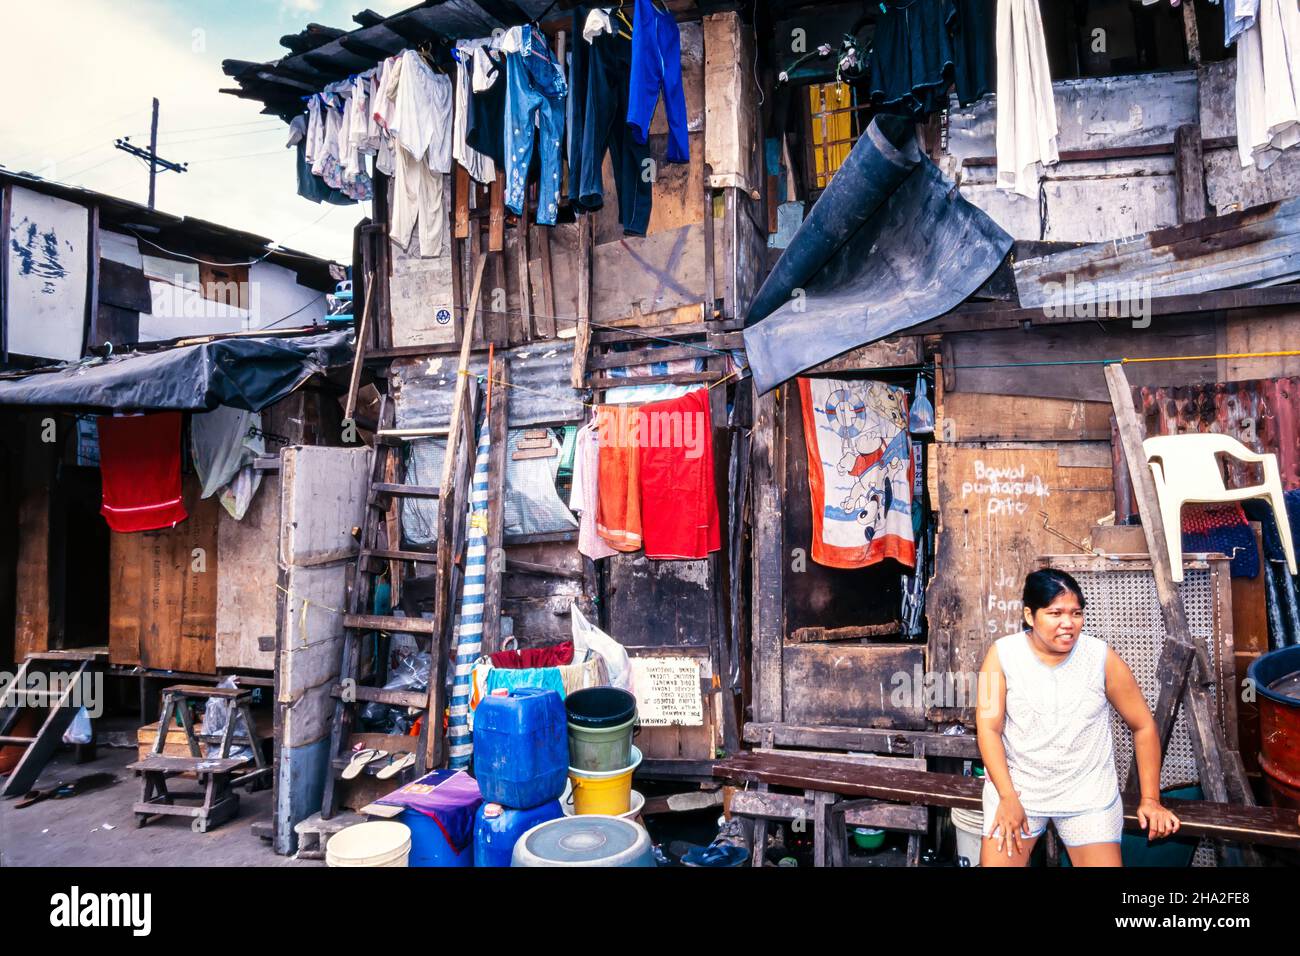 Slum Housing And Shanty Town In Tondo Central Manila Philippines | Hot ...